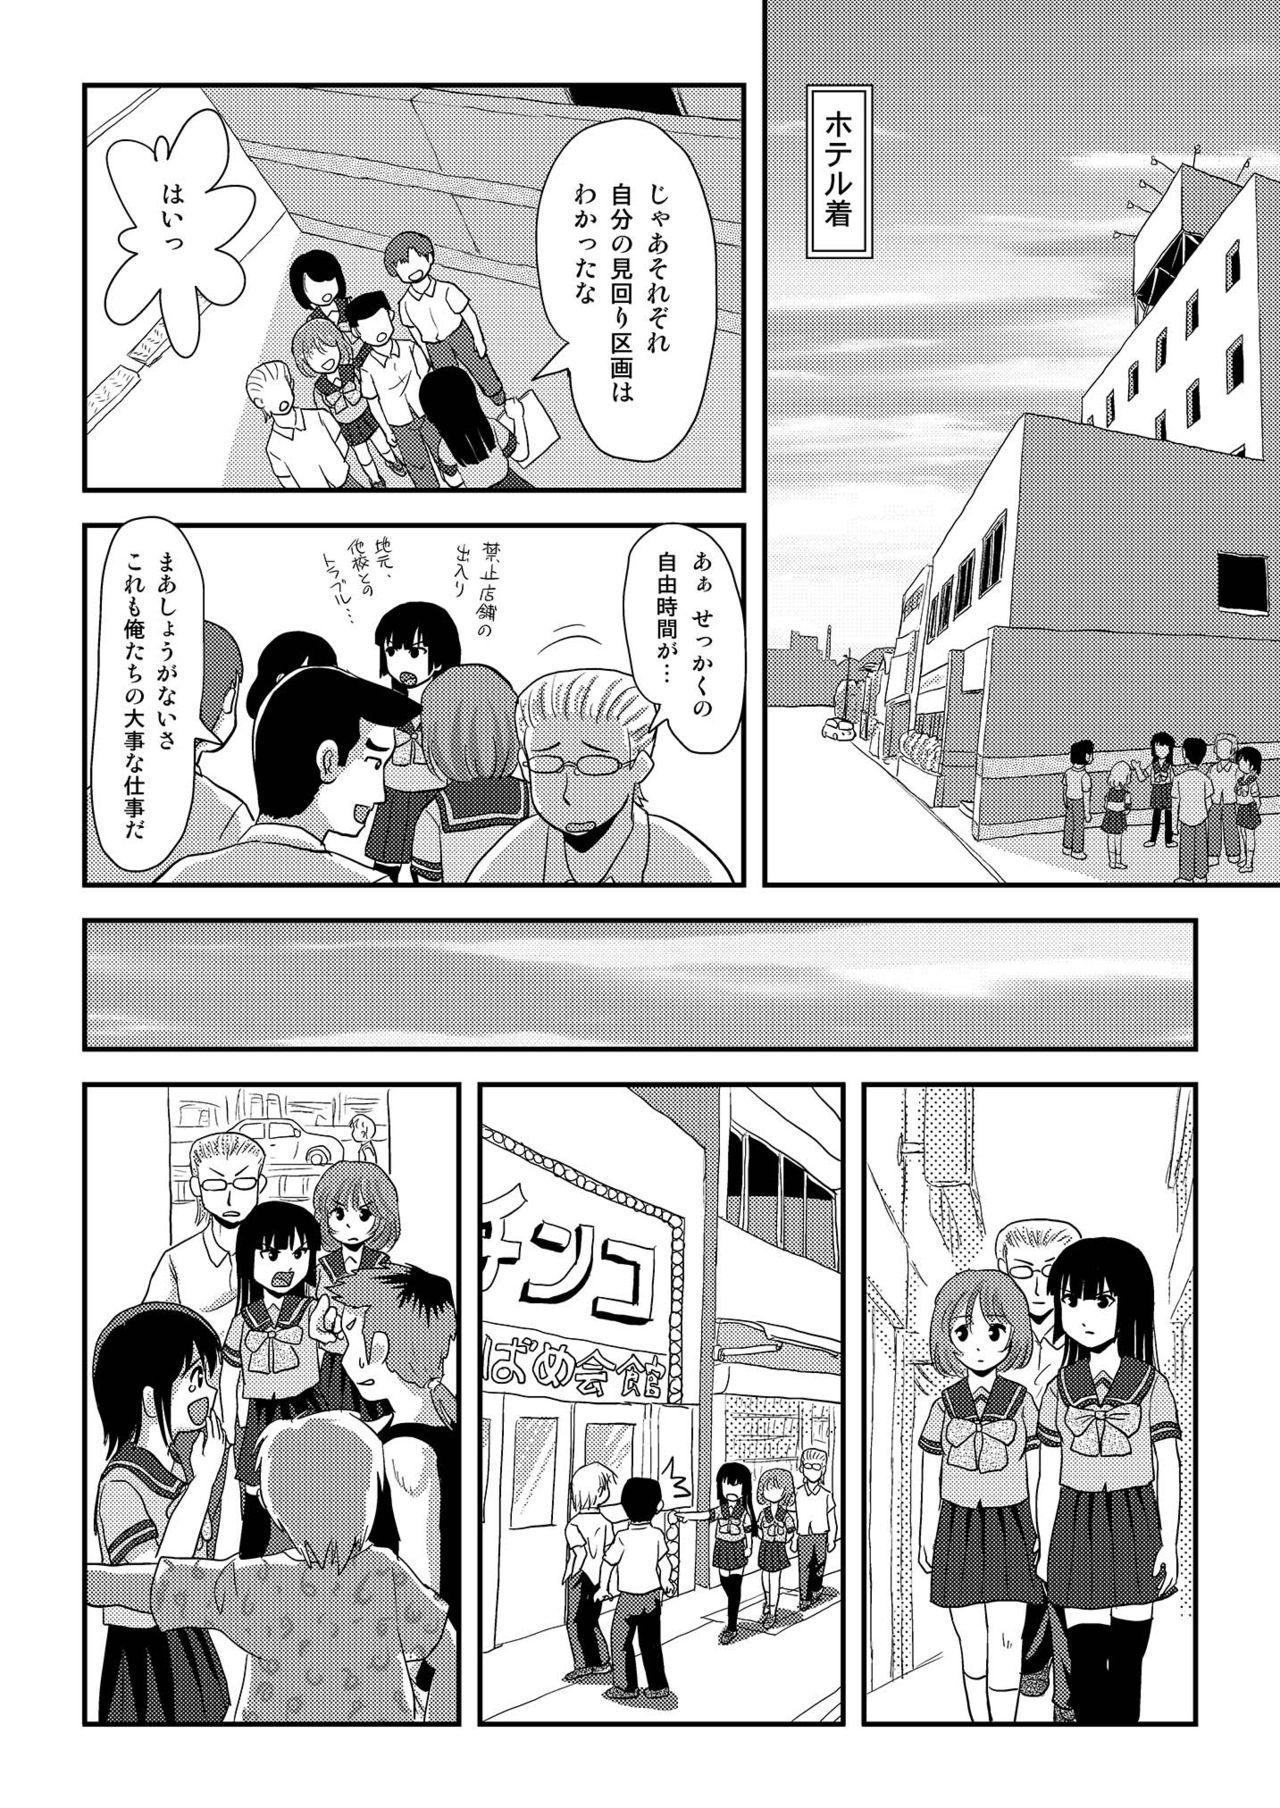 Socks Sakura Kotaka no Roshutsubiyori 6 - Original Special Locations - Page 10